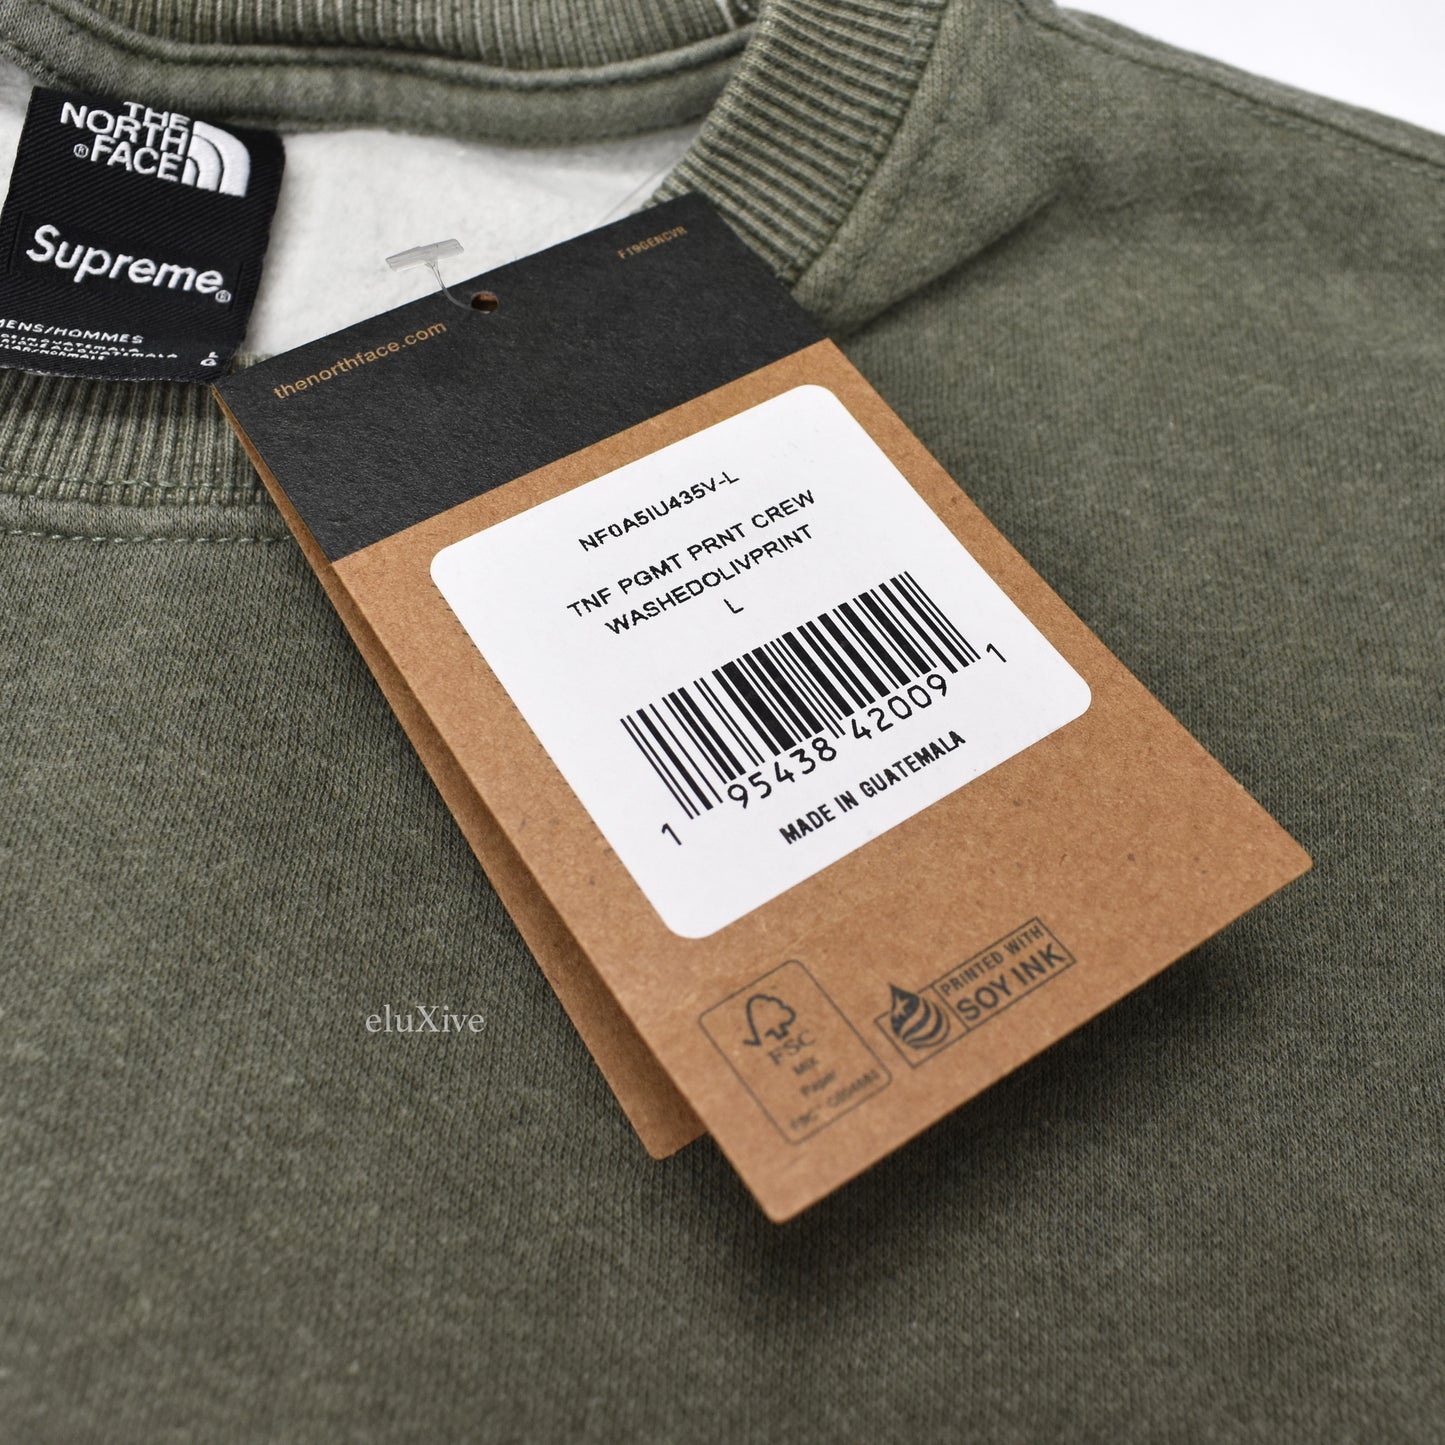 Supreme x The North Face - Pigment Print Logo Sweatshirt (Olive)